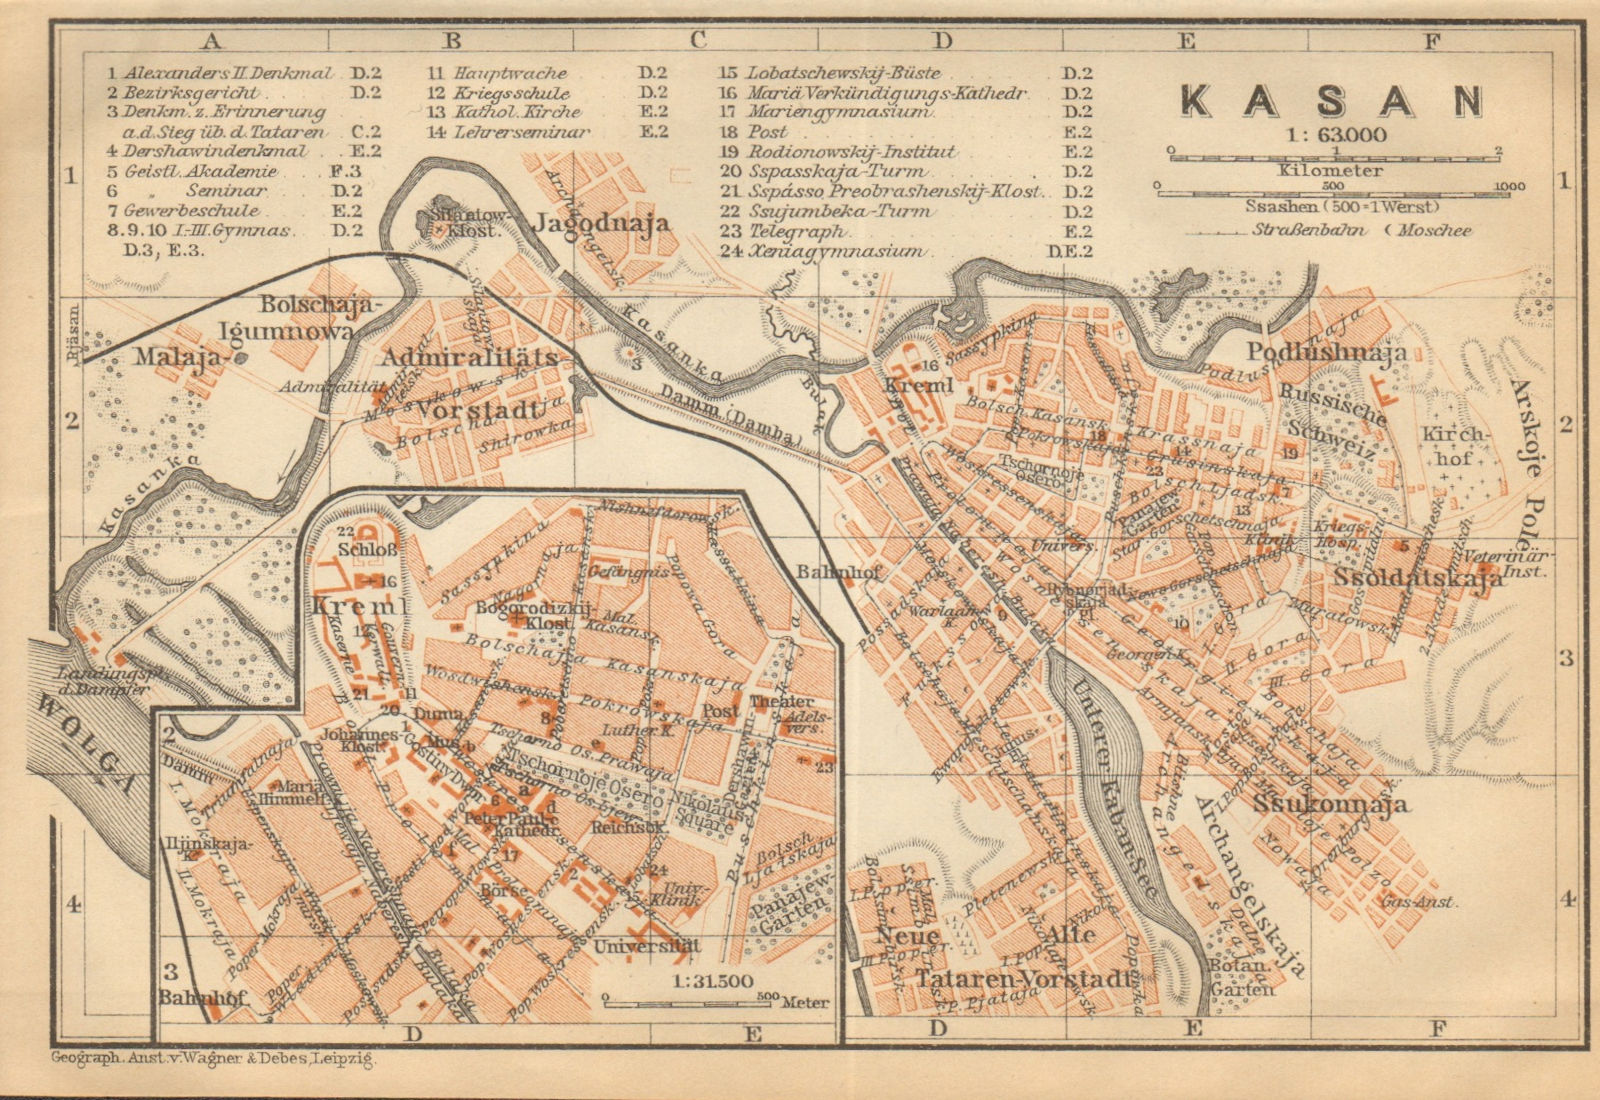 Associate Product Kazan town/city plan. Russia. Kasan. BAEDEKER 1912 old antique map chart